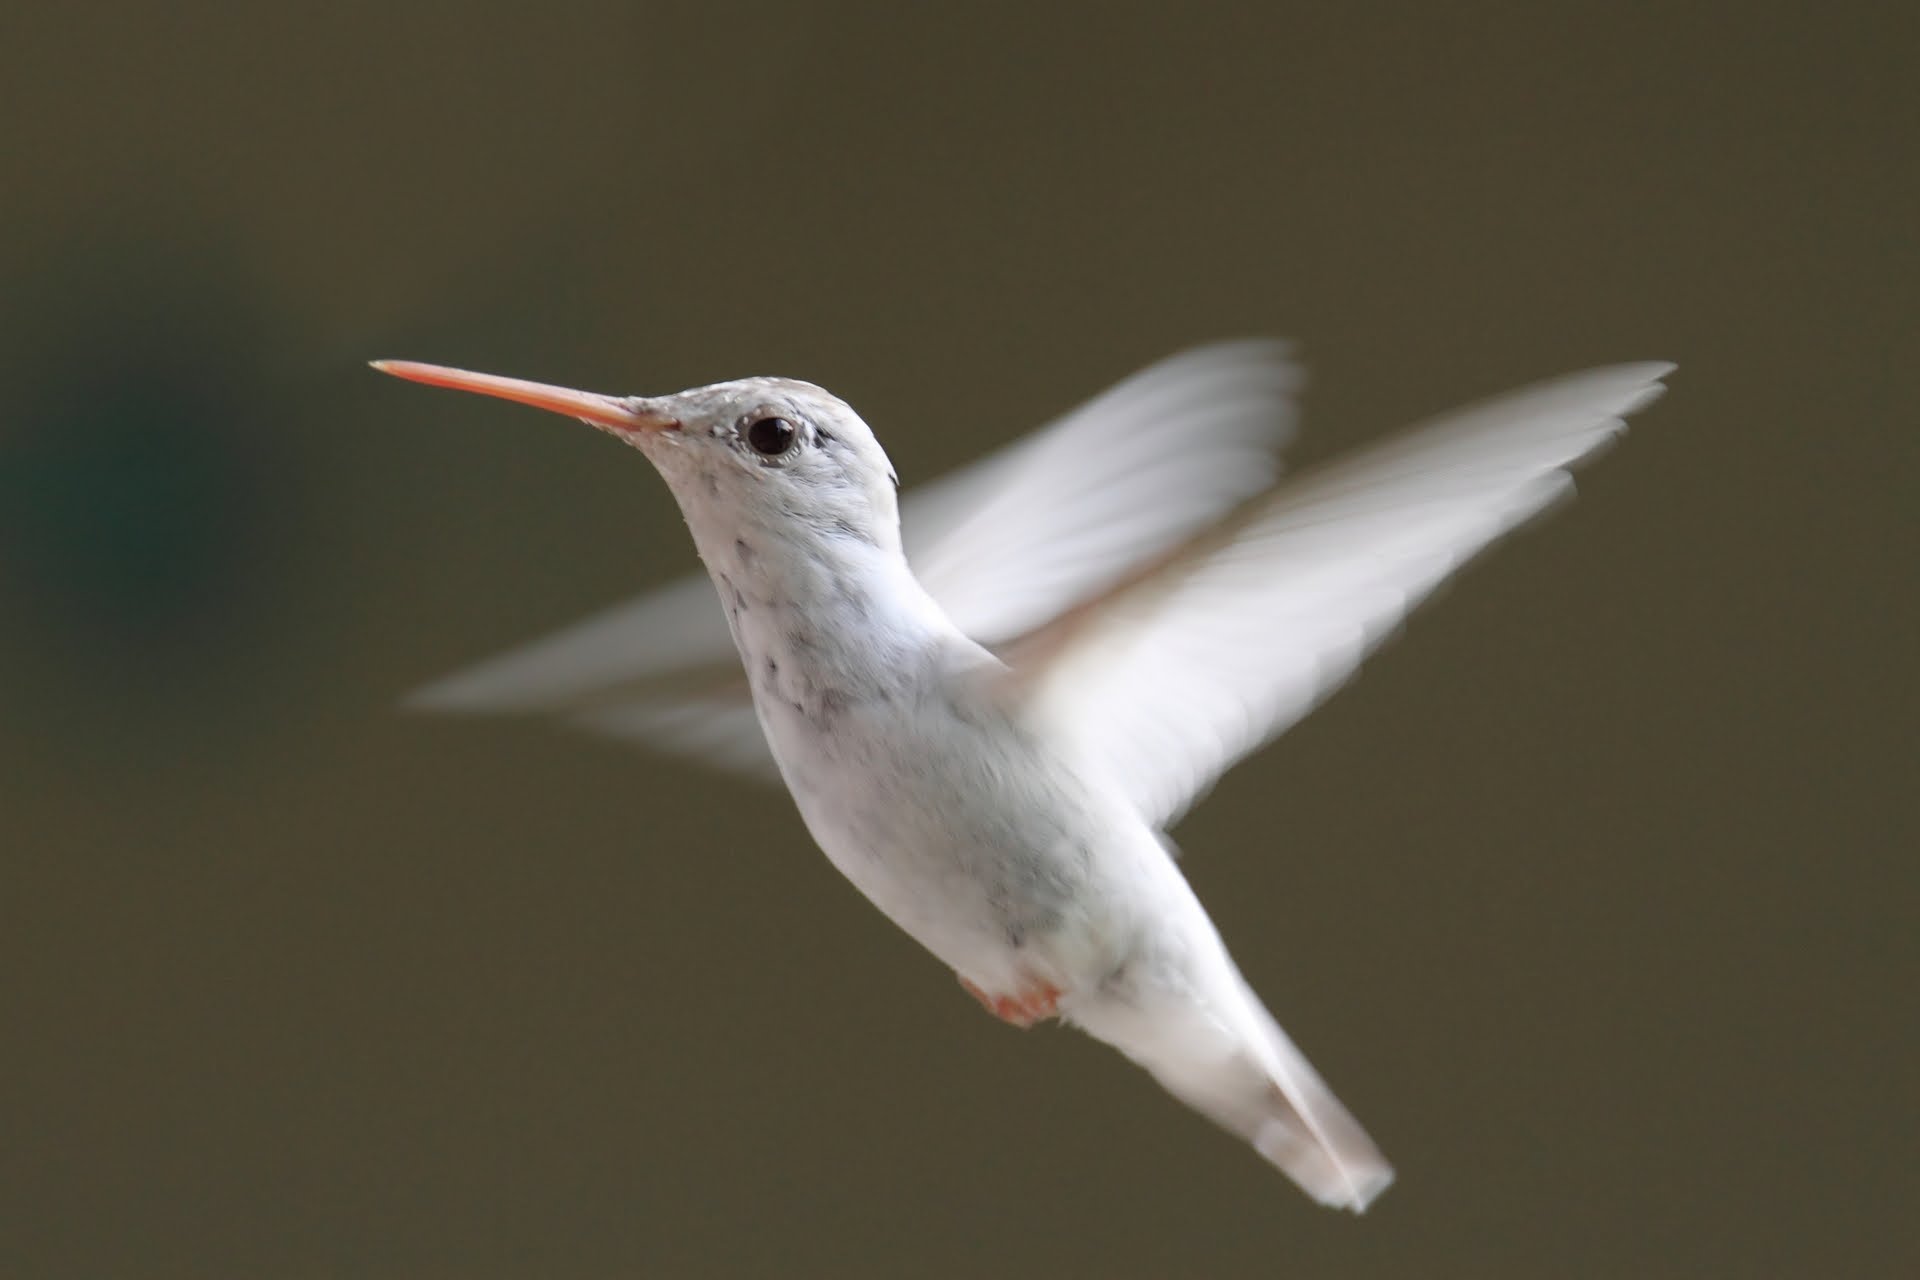 Hummingbirds Ultra Slow Motion - Amazing Facts, Full HD - YouTube